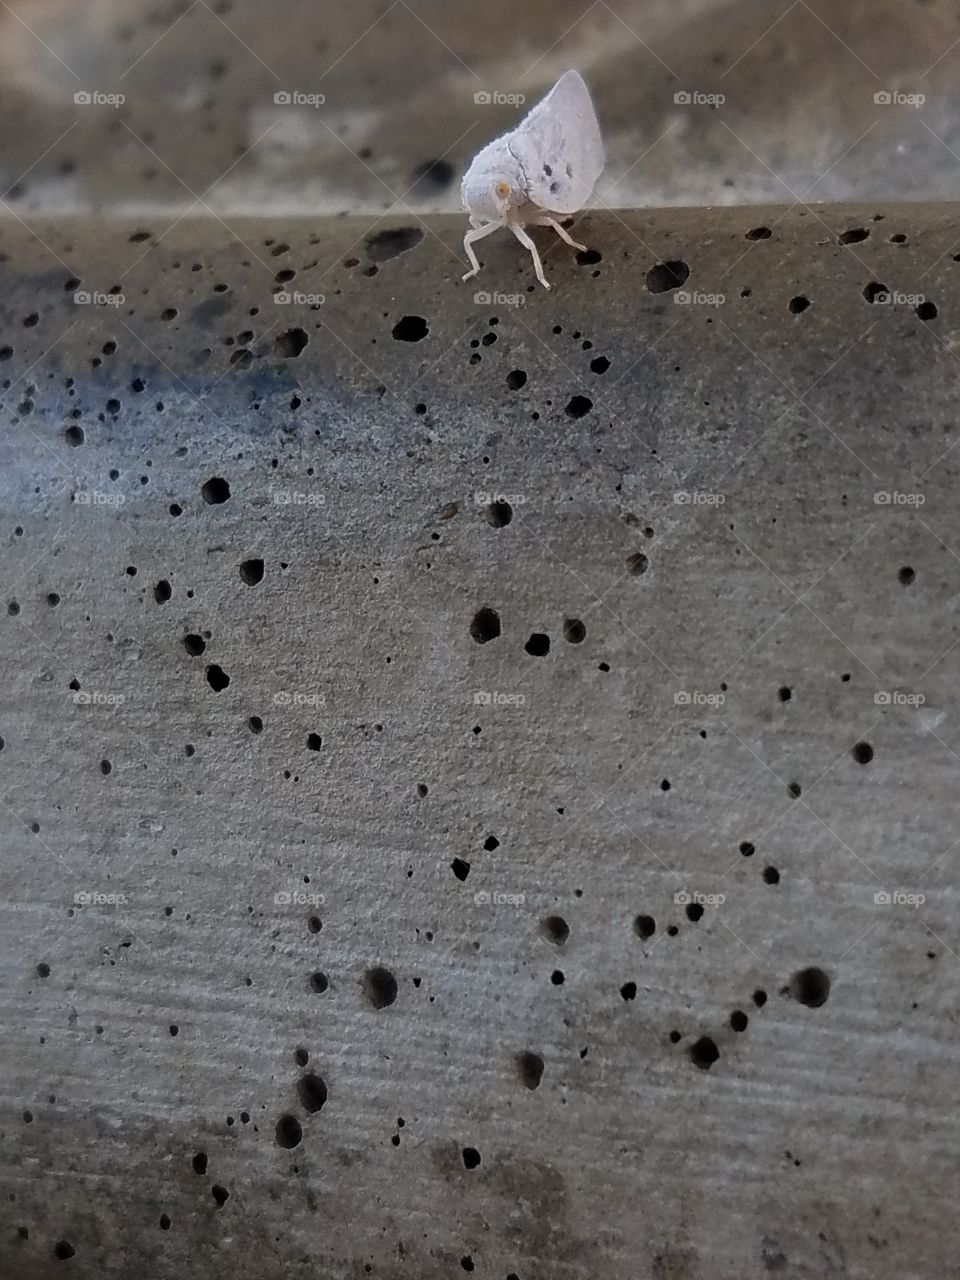 Leaf hopper on concrete